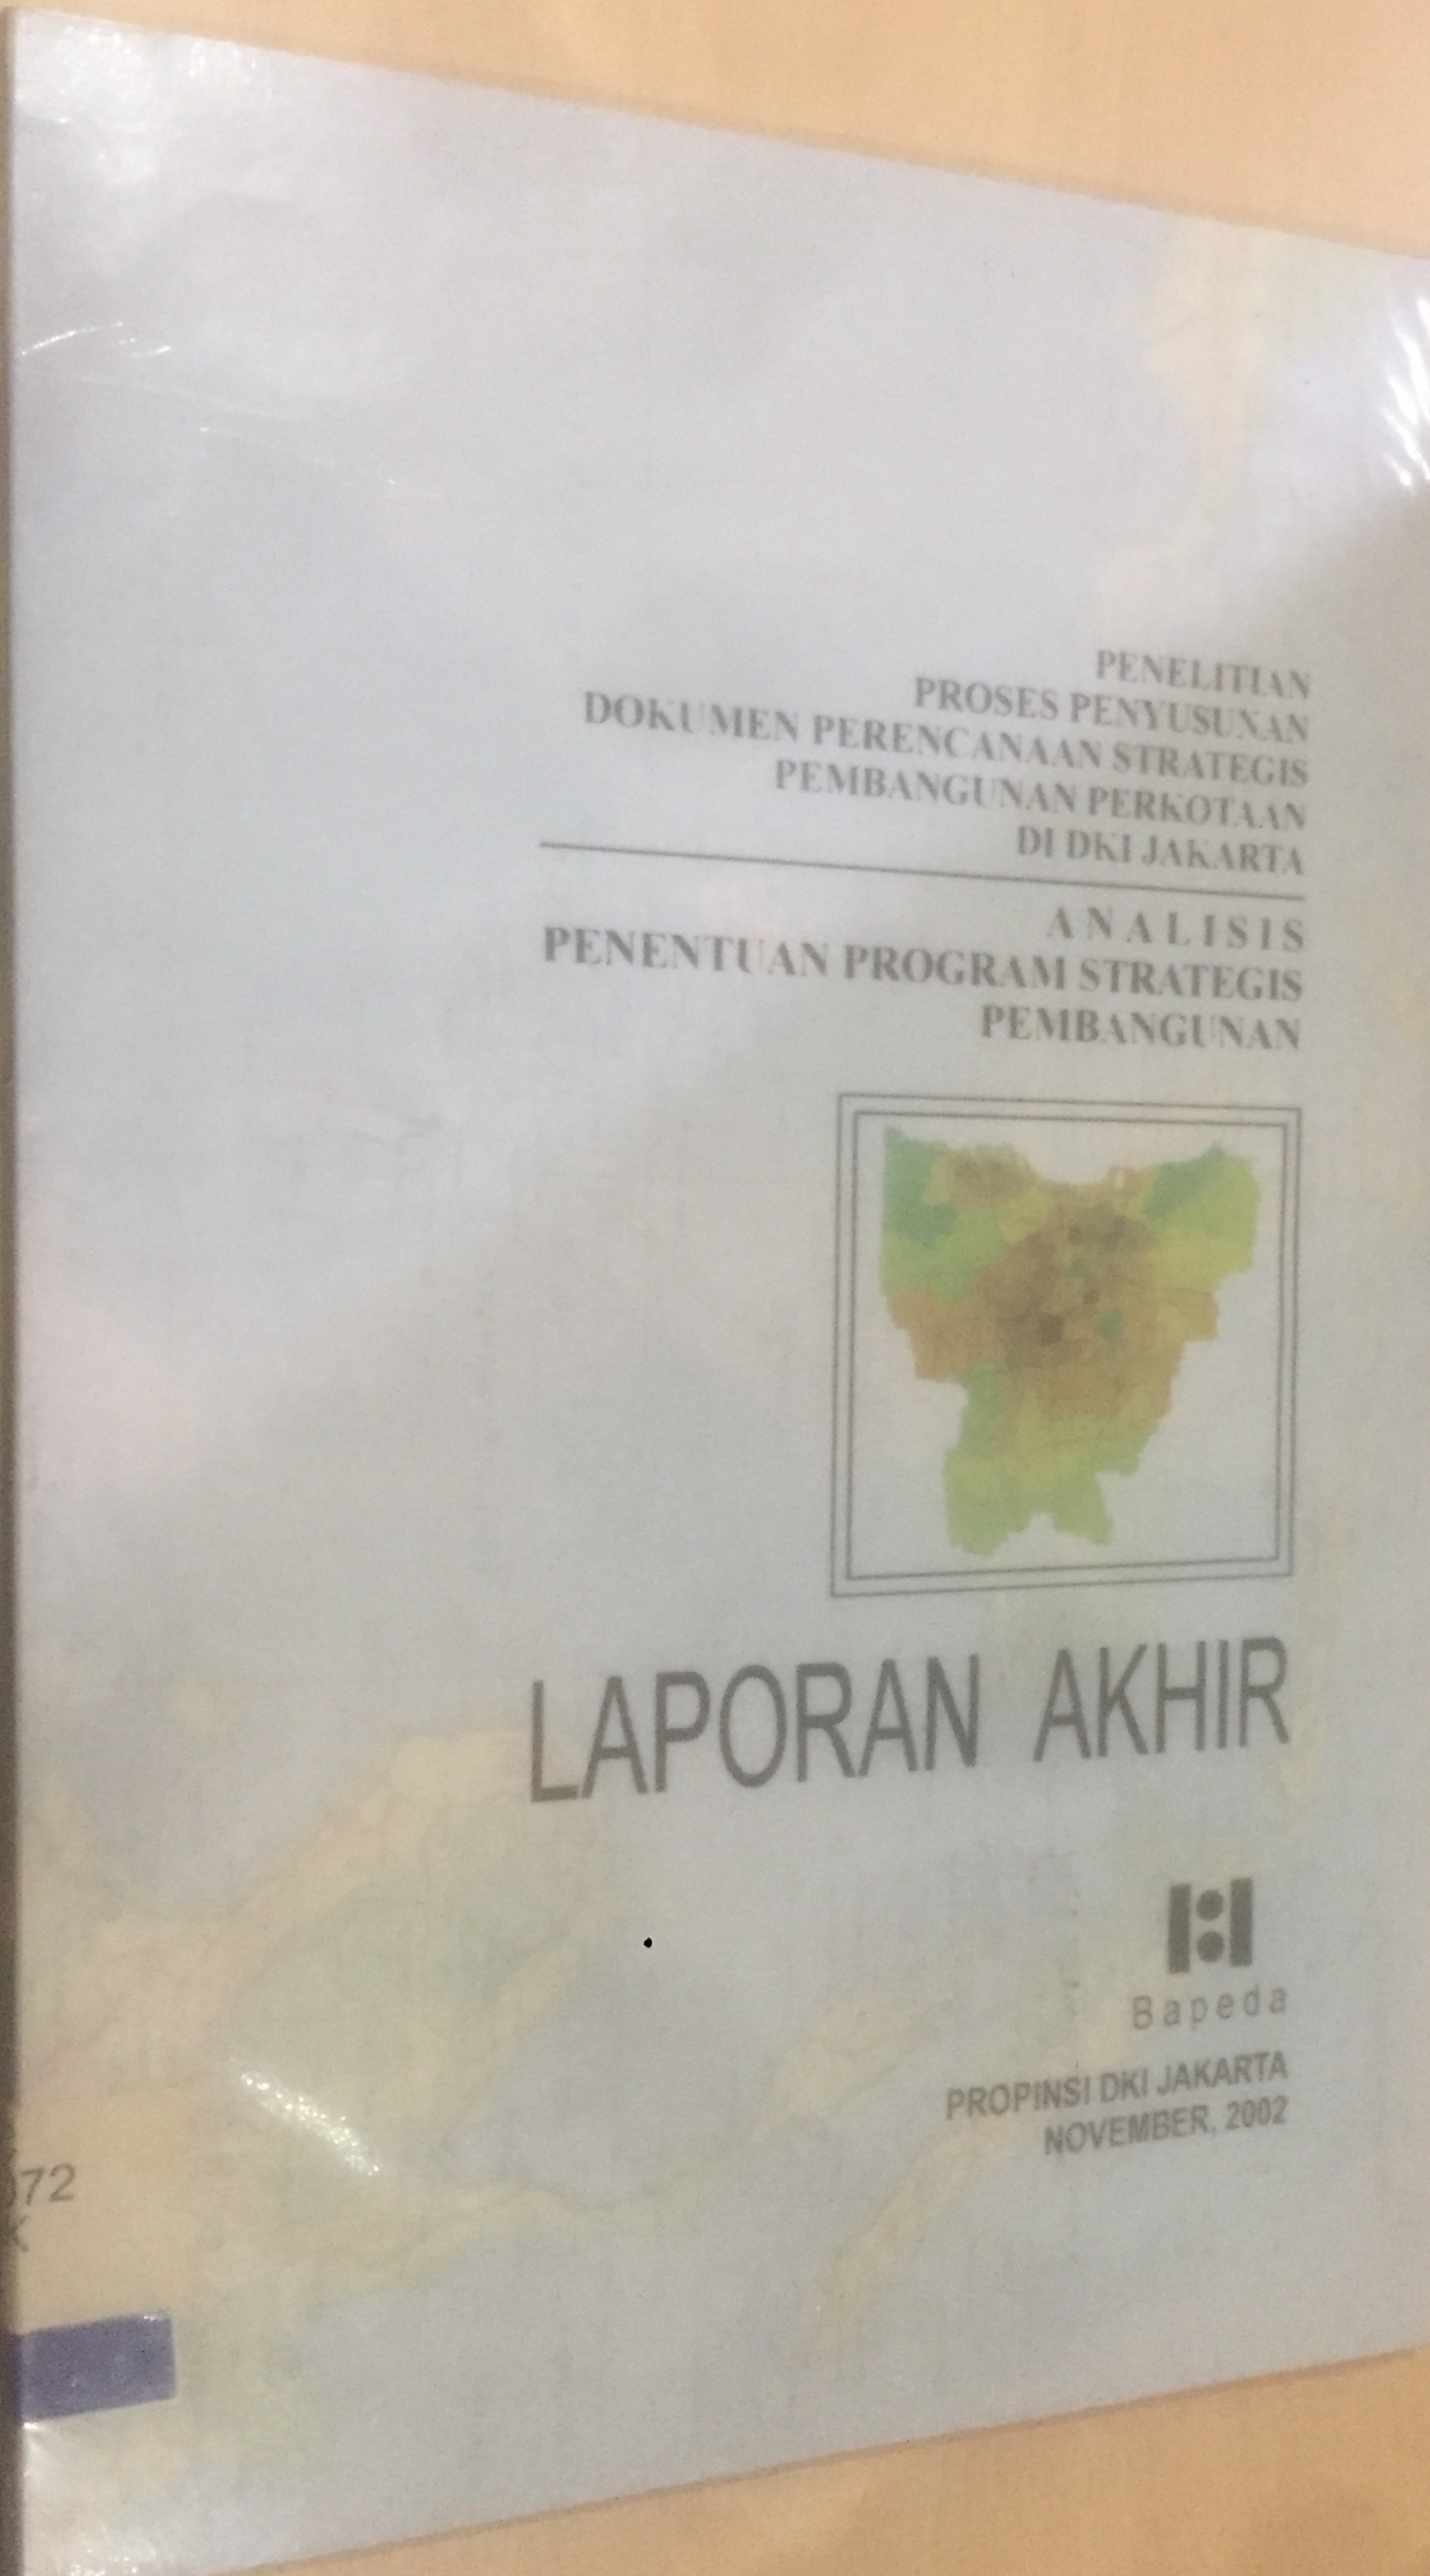 Laporan akhir :  penelitian proses penyusunan dokumen perencanaan strategis pembangunan perkotaan di DKI Jakarta